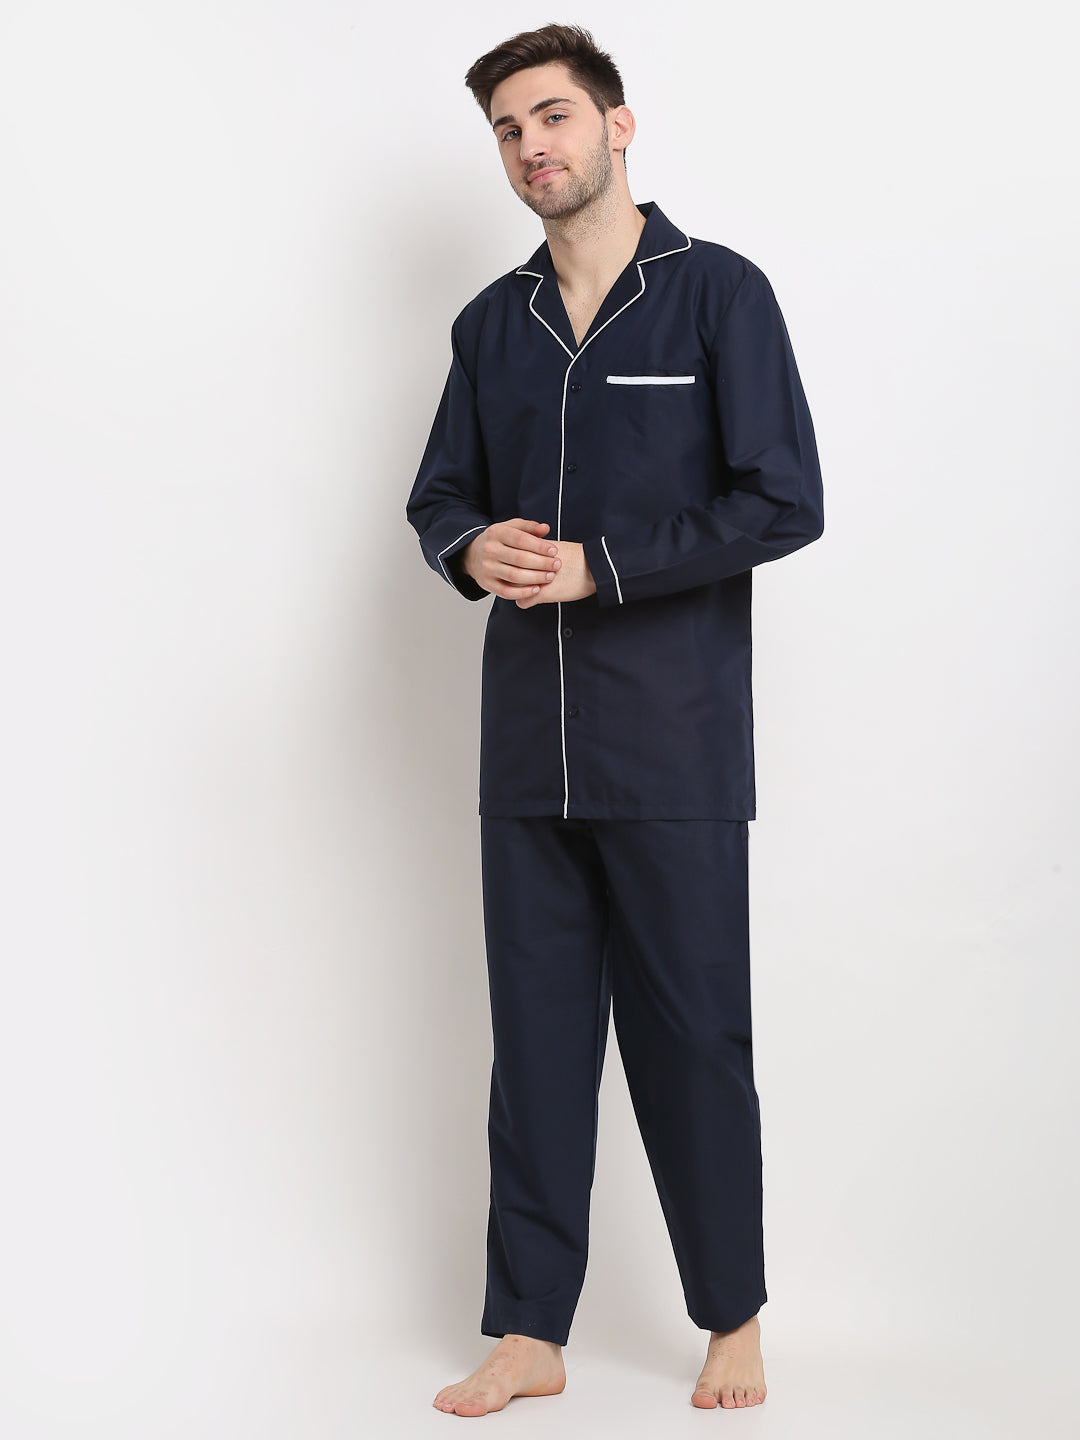 Men's Navy Cotton Solid Night Suits ( GNS 003Navy ) - Jainish